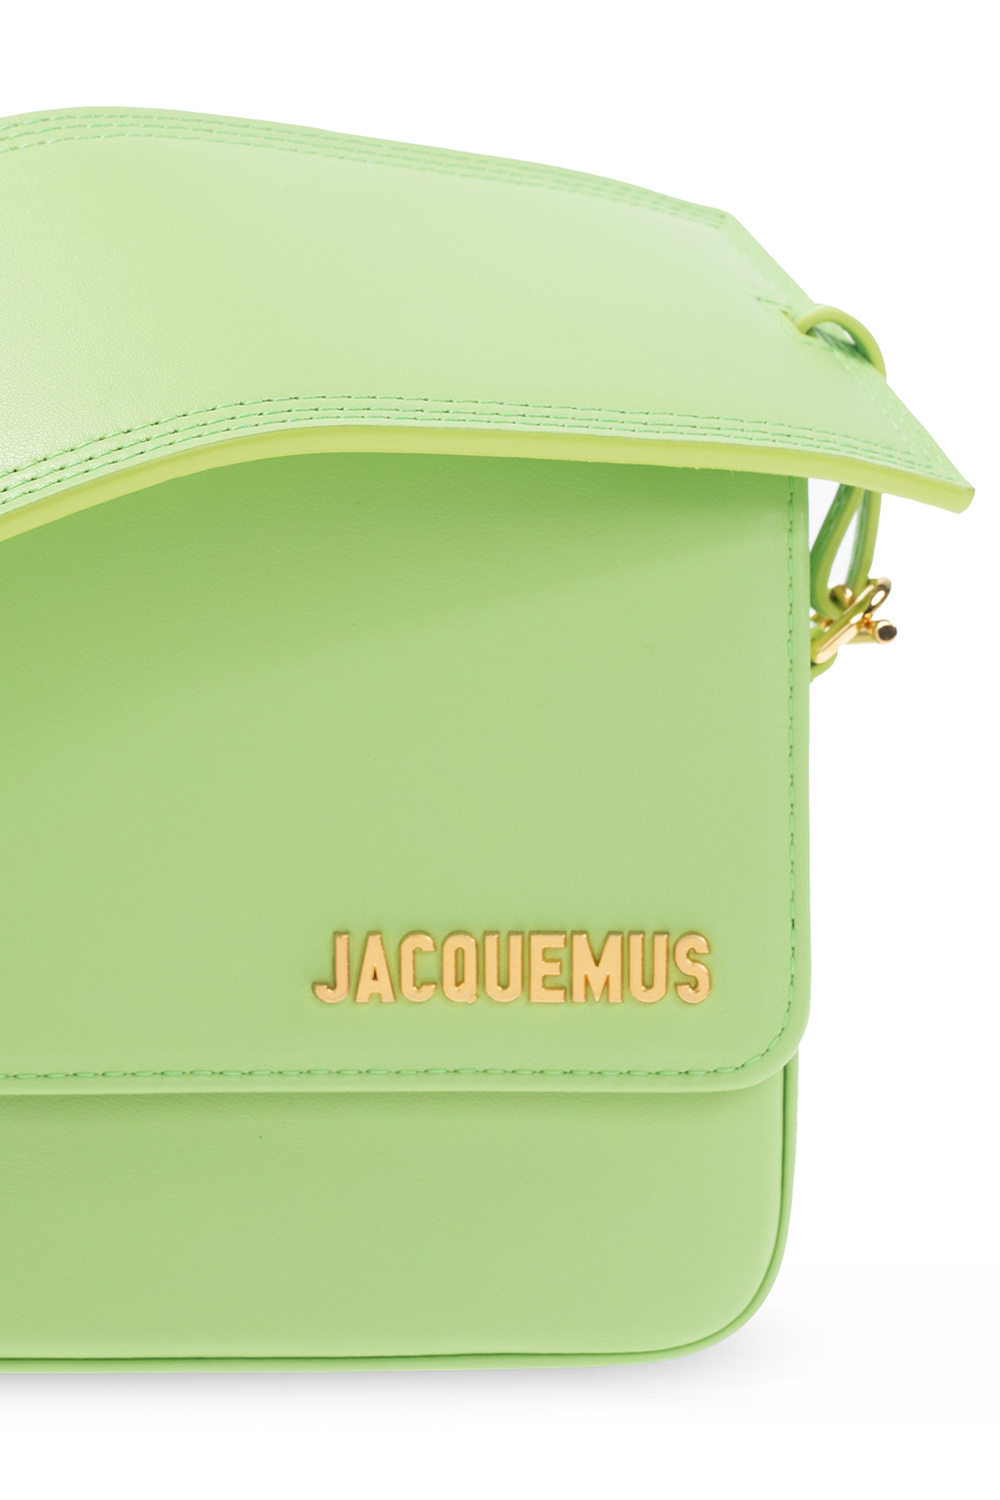 Jacquemus ‘Le Carinu’ hand bag